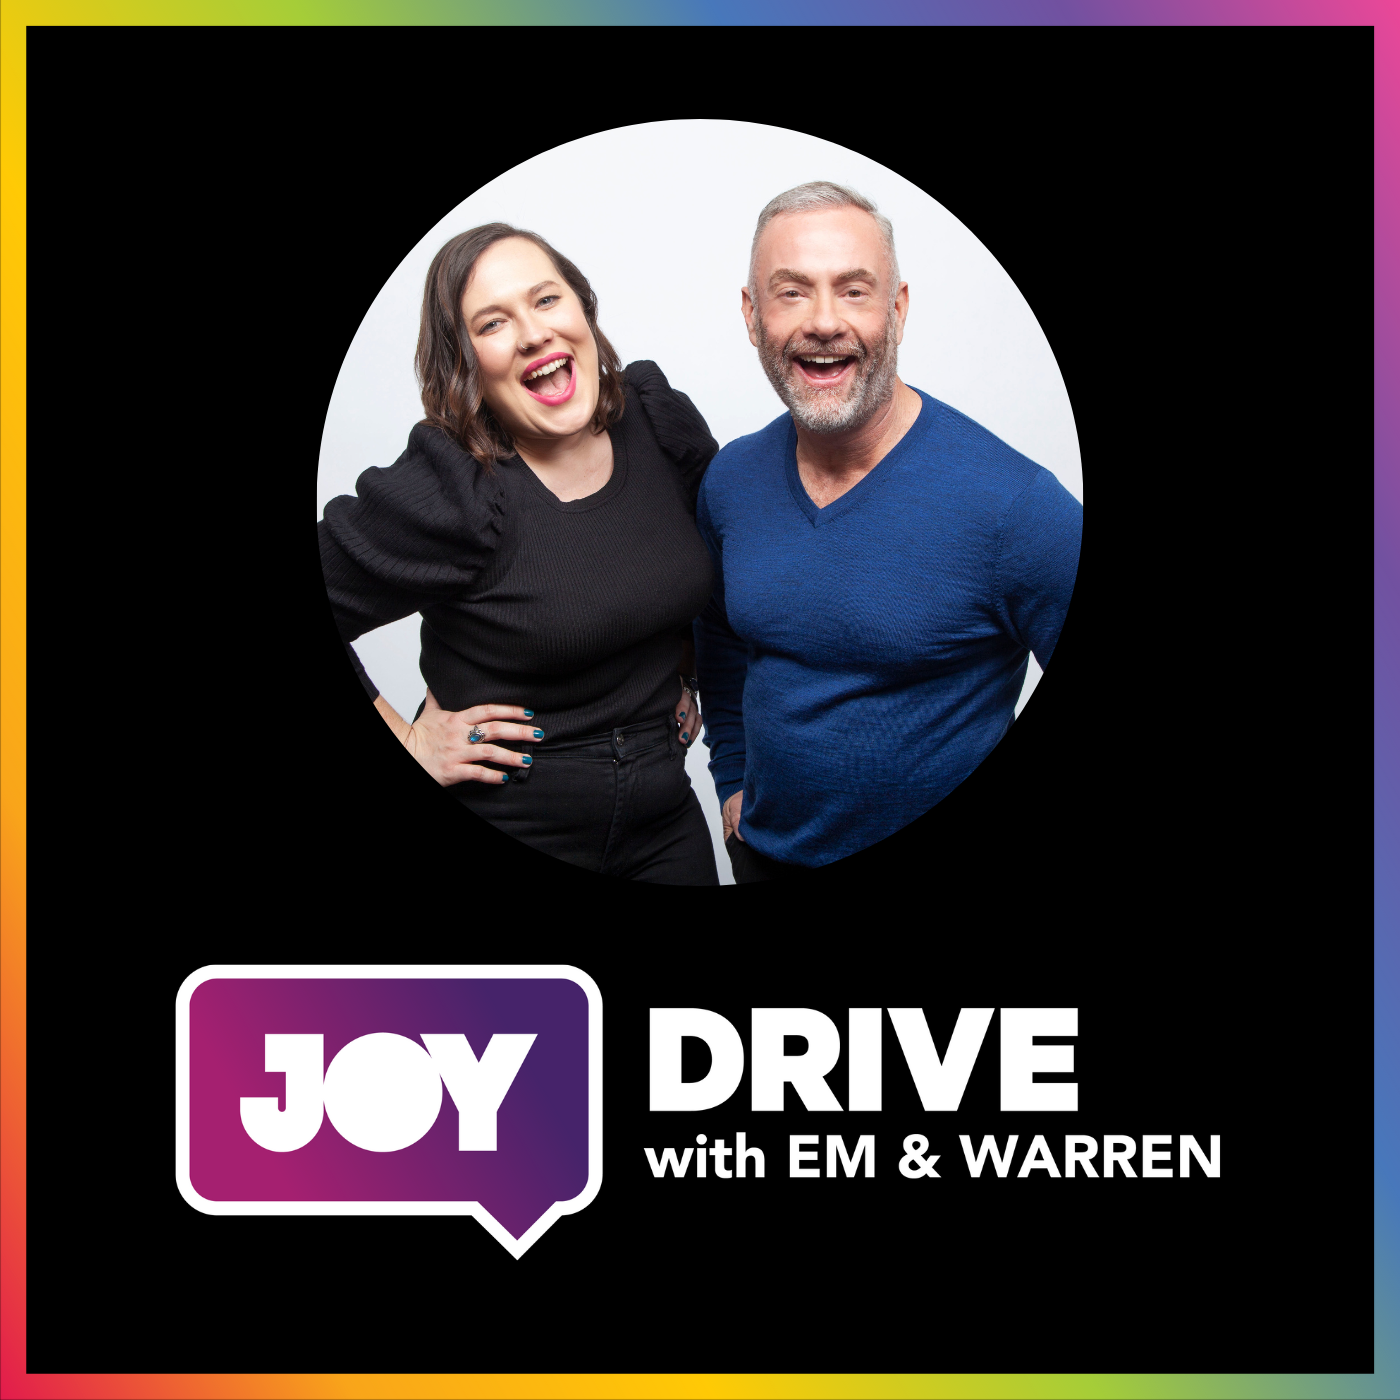 Amy Hume x JOY Drive: How Australians Say ‘No’